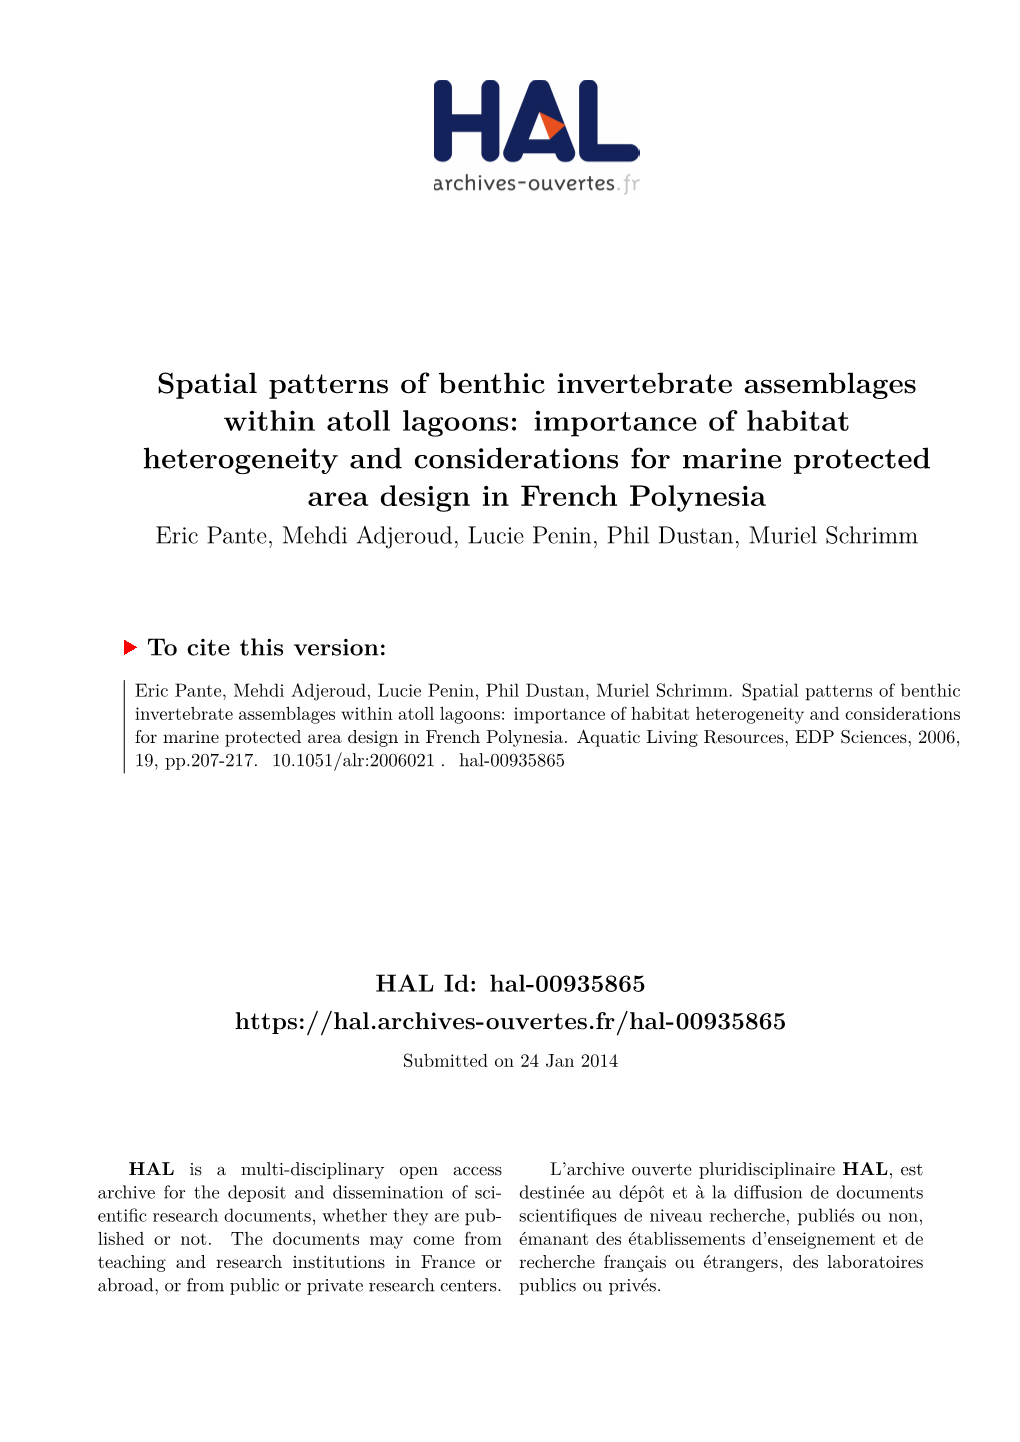 Spatial Patterns of Benthic Invertebrate